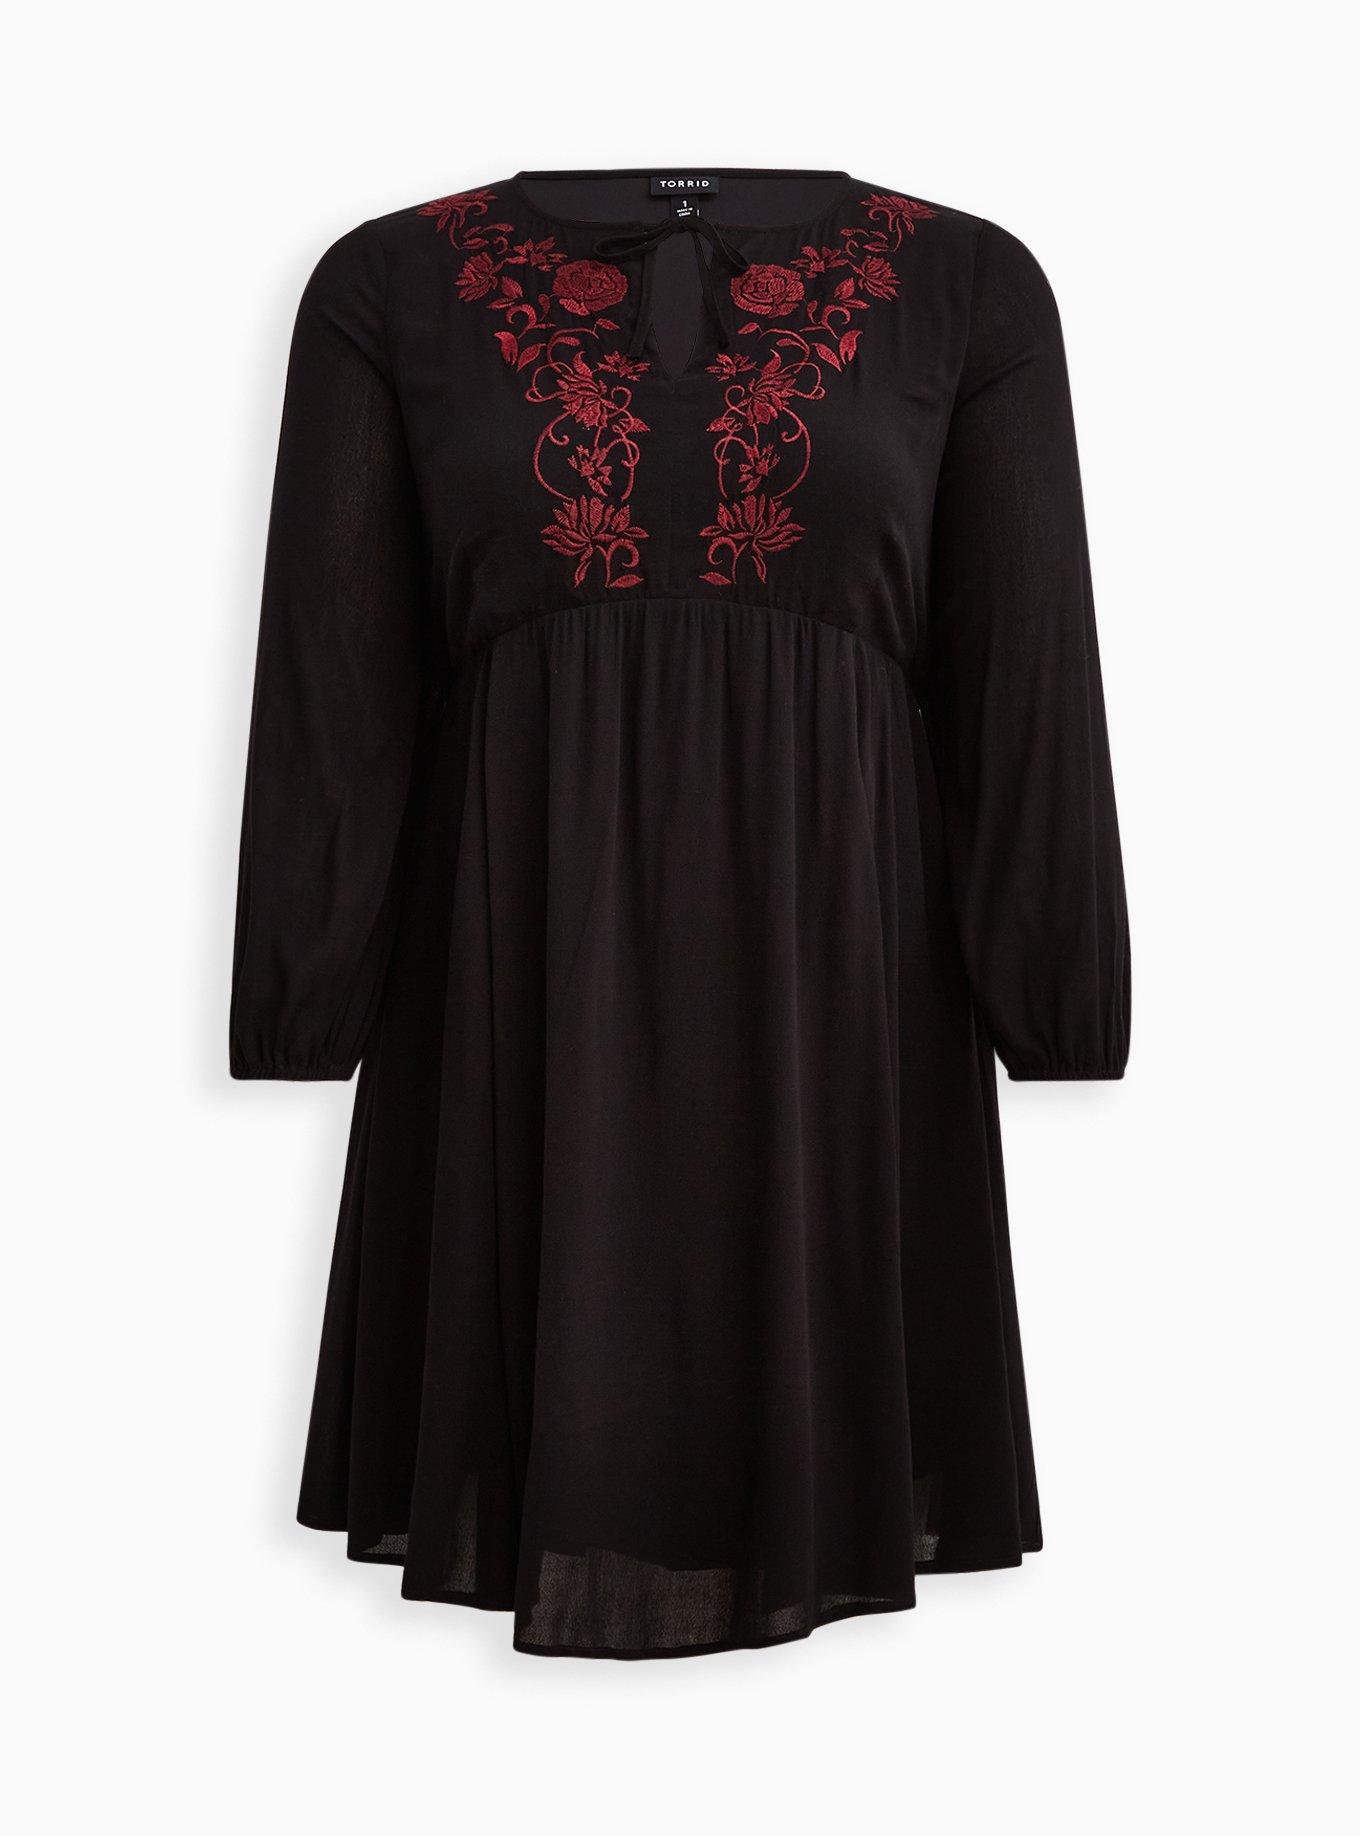 Plus Size - Skater Dress - Embroidered Gauze Black - Torrid